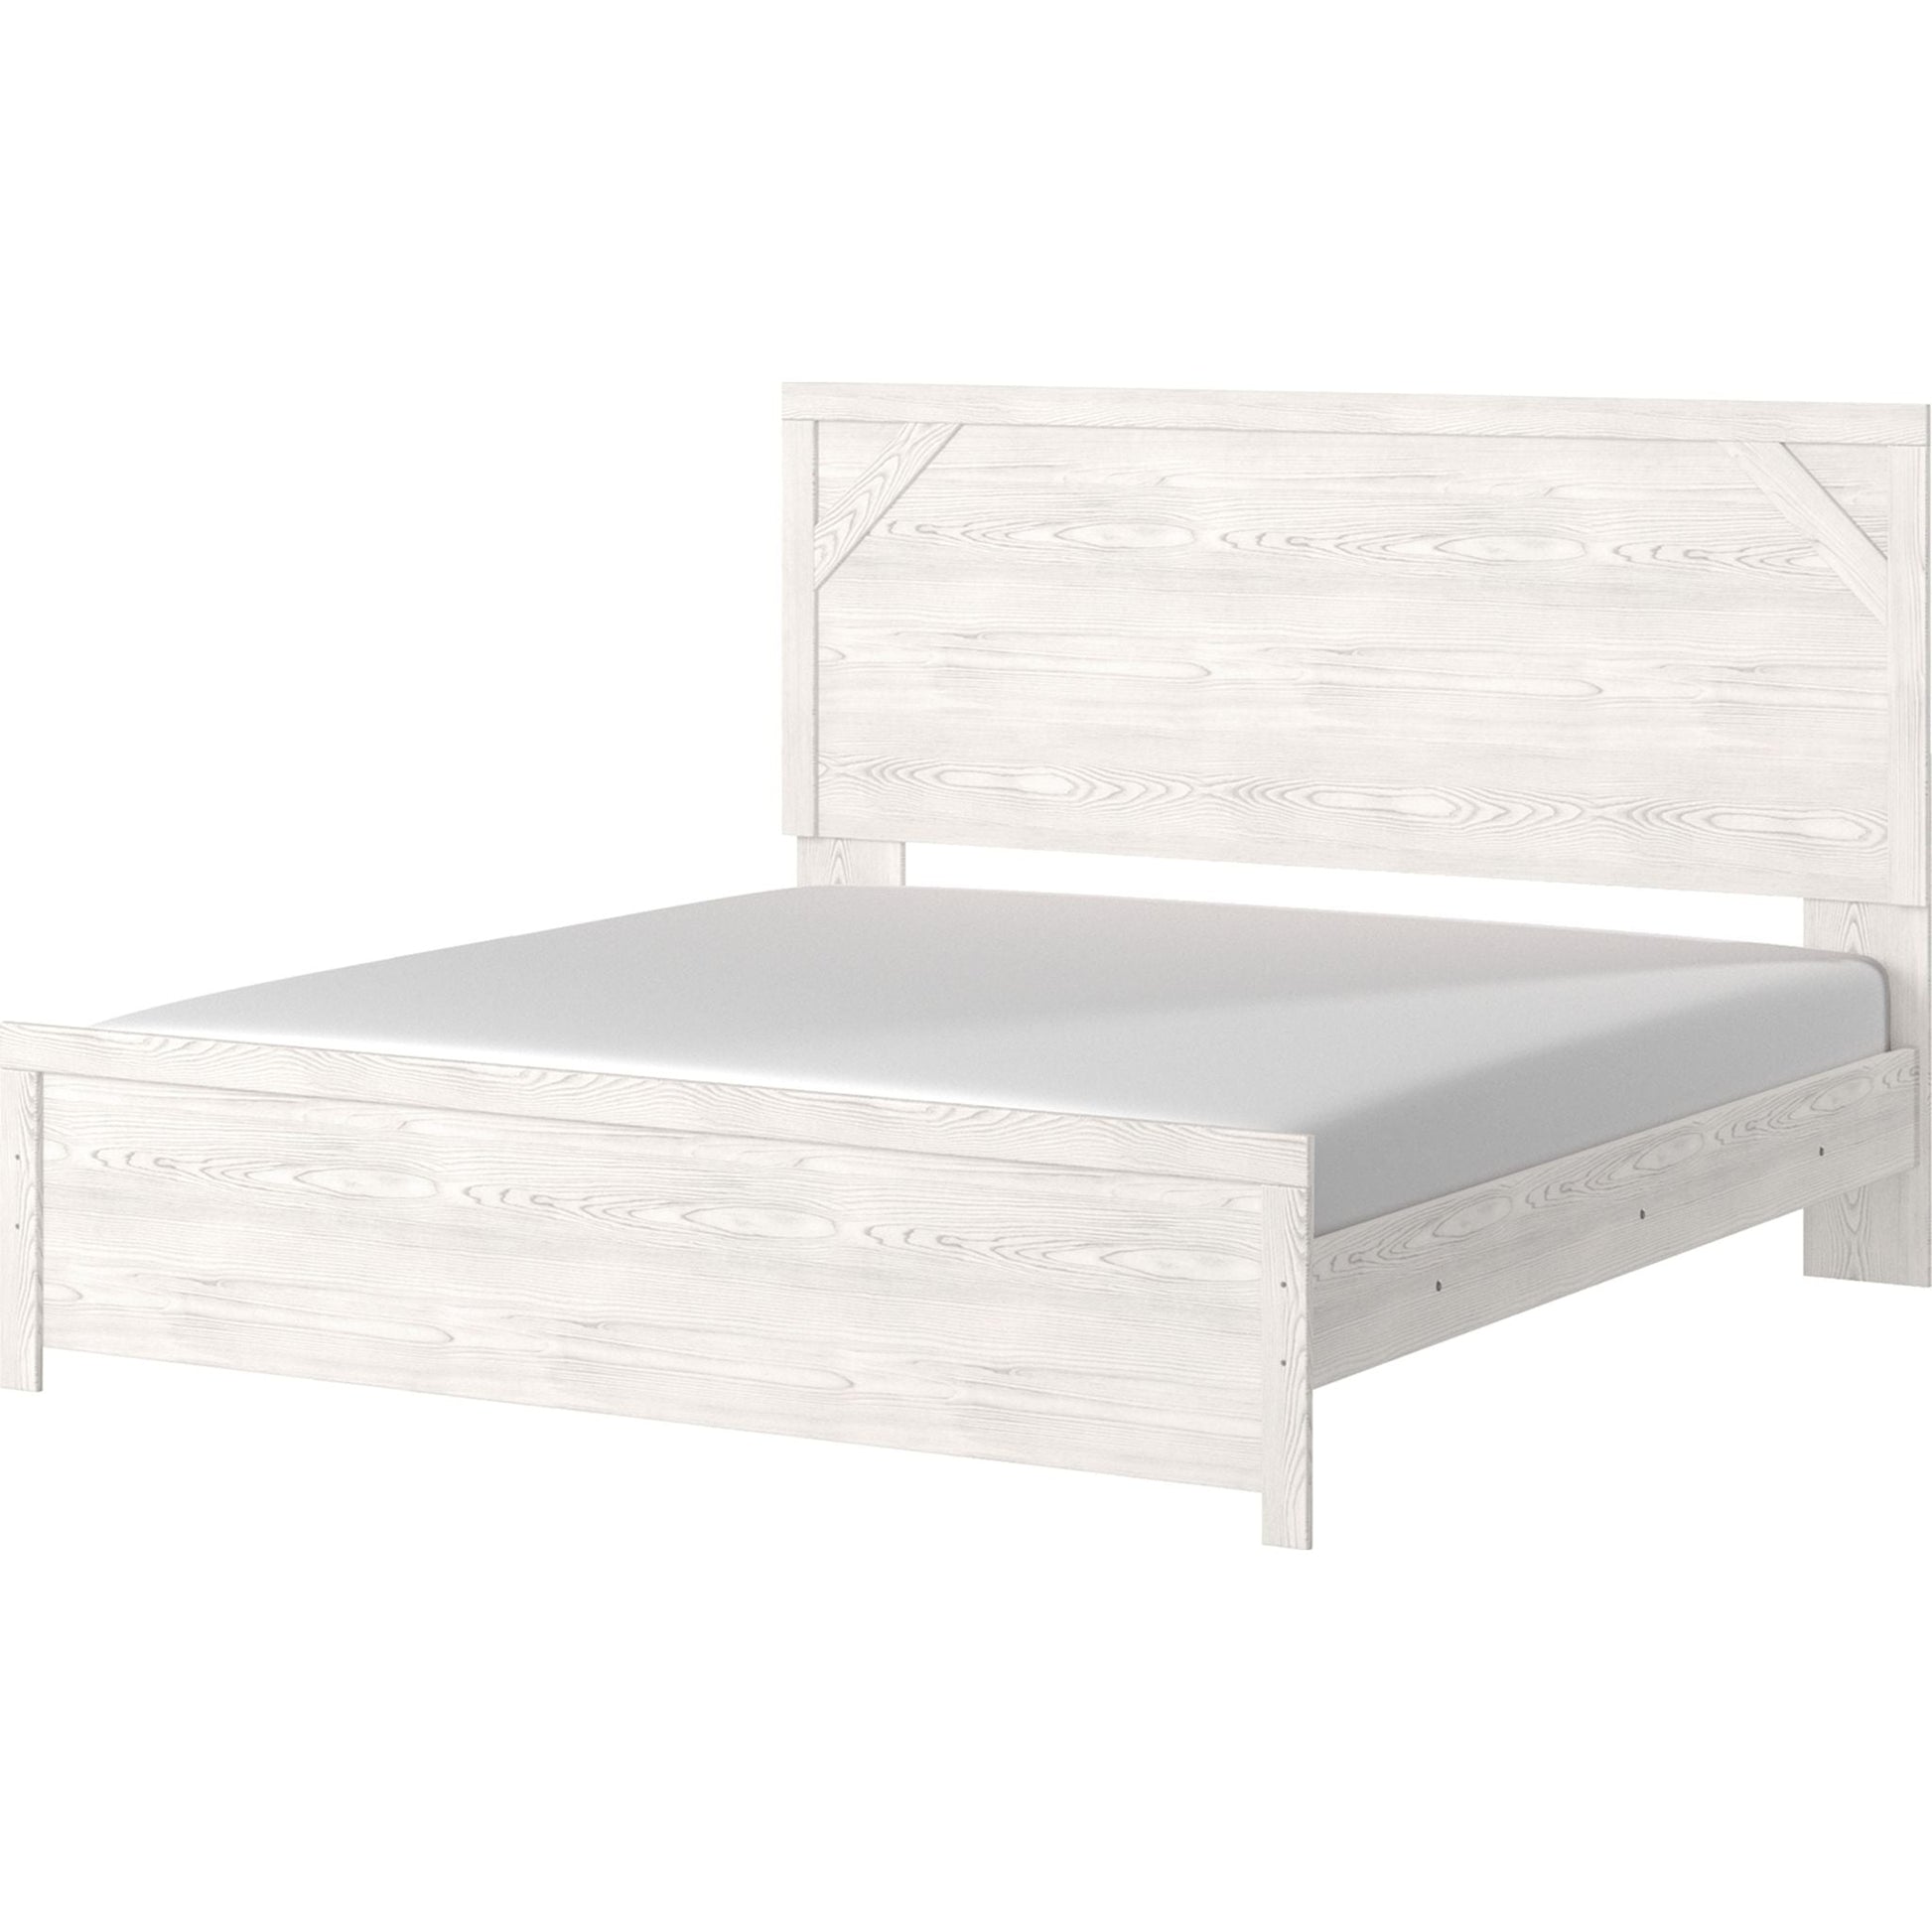 Gerridan 3 Piece King Panel Bed - White/Gray